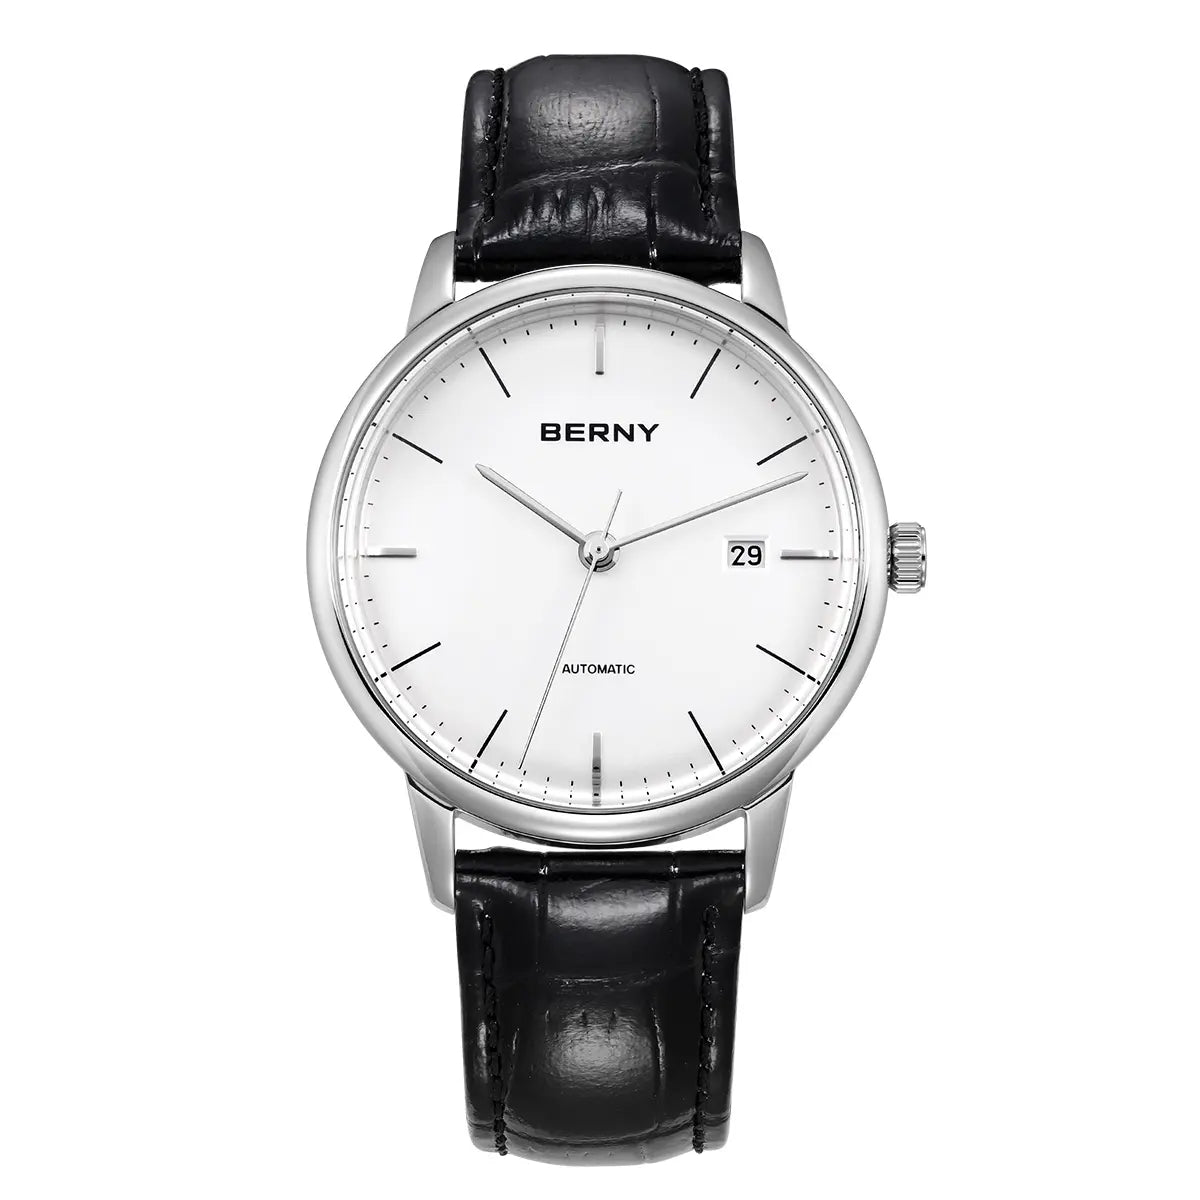 BERNY-Men Automatic Dress Watch-AM012M-B